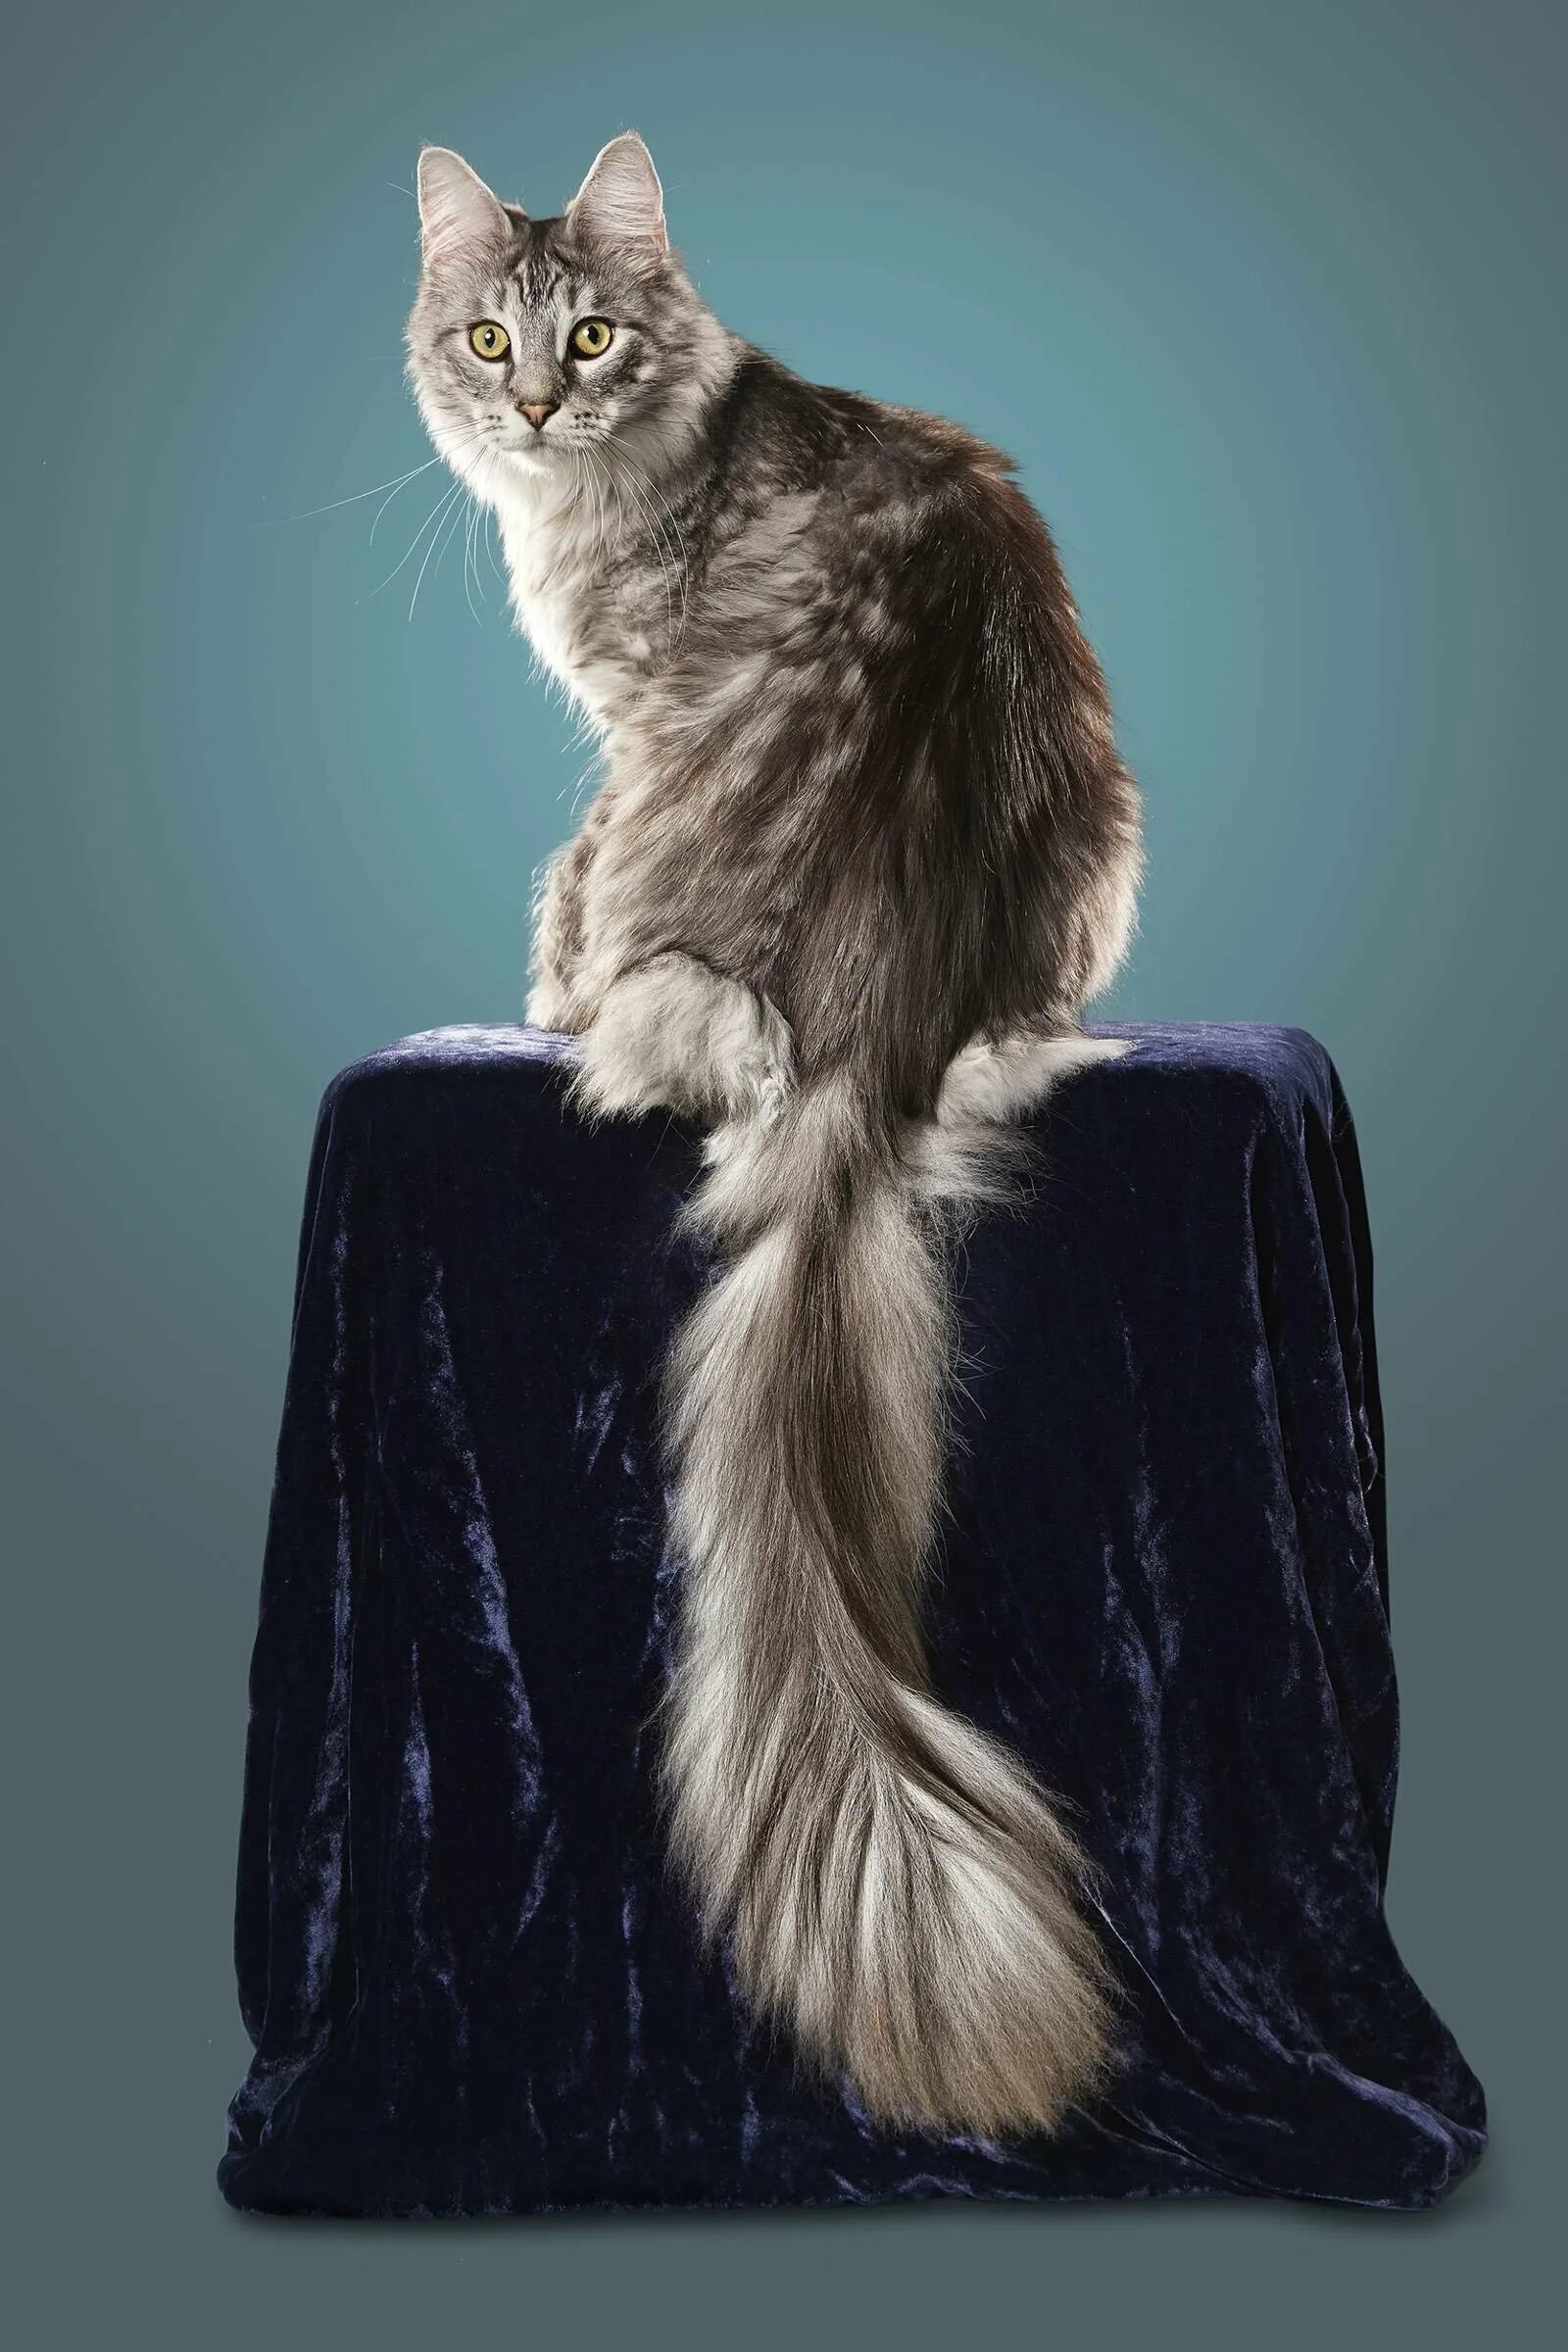 Длинный кот порода. Мейн-кун. Кот Сигнус с самым длинным хвостом. Сигнус кот порода. Хвост Мейн куна.